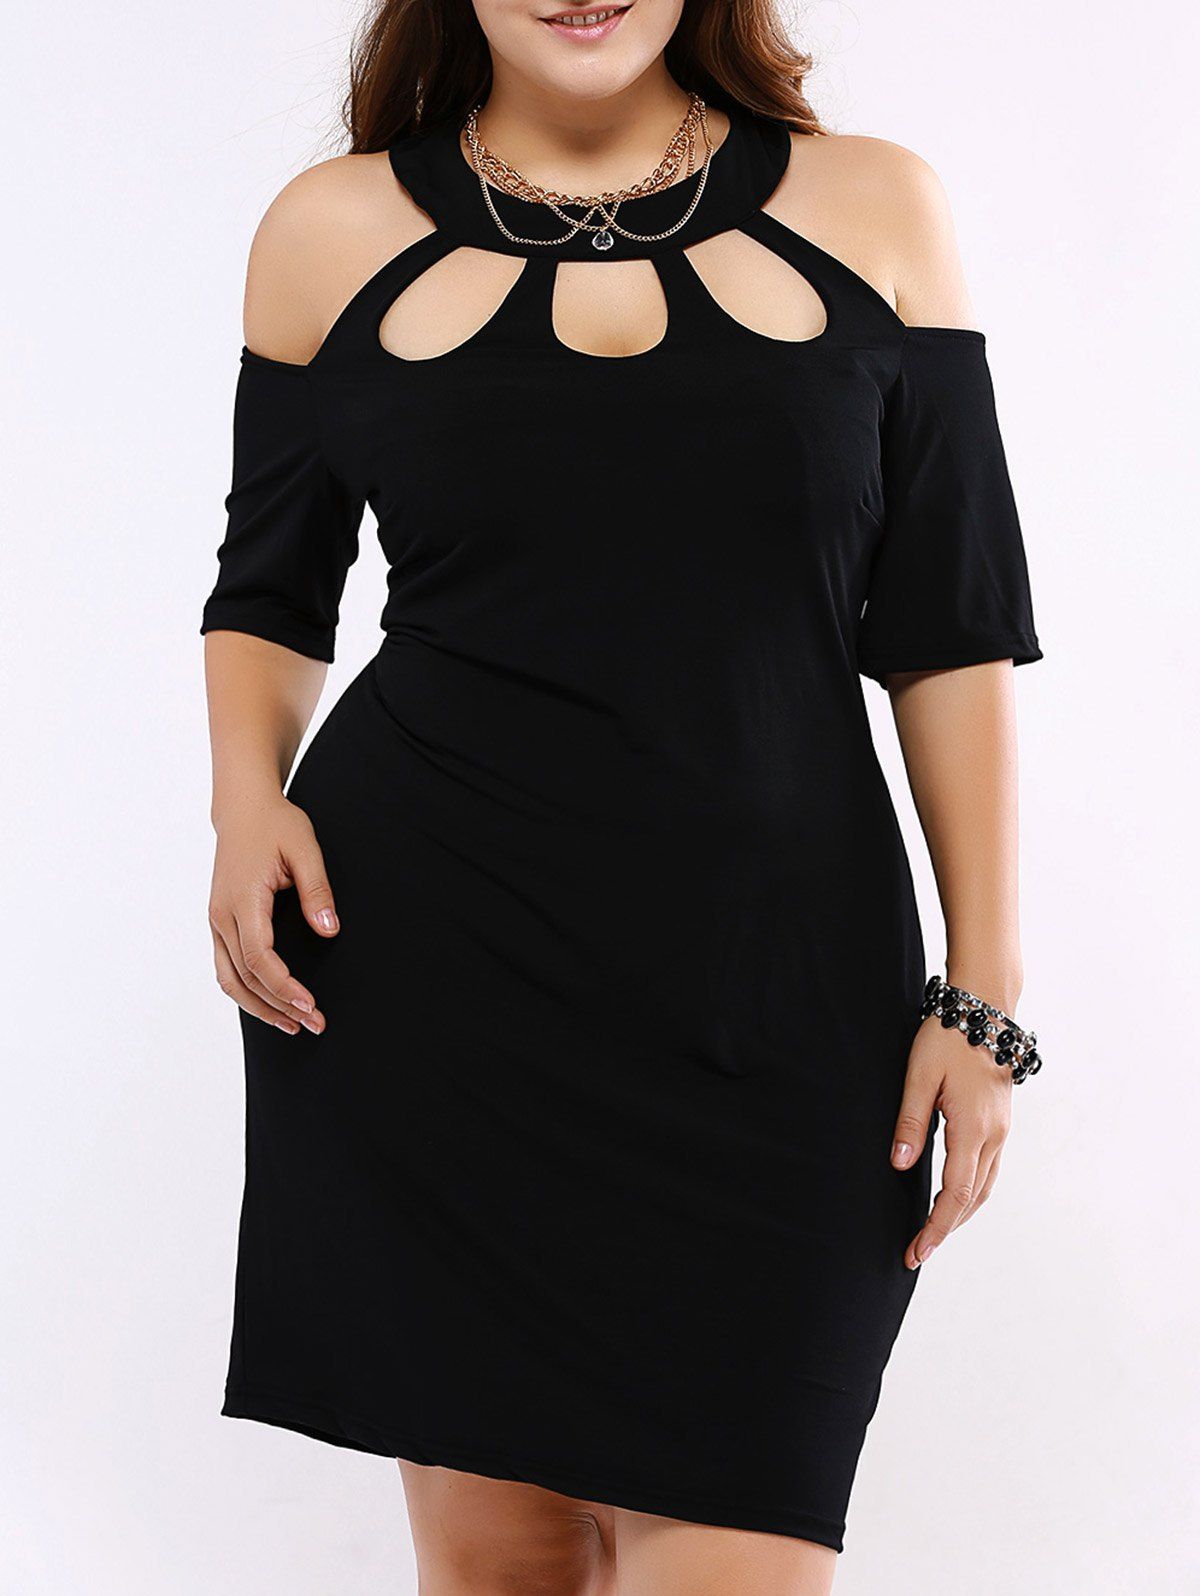 Plus Size Alluring Cut Out Black Sheath Dress - BLACK 5XL